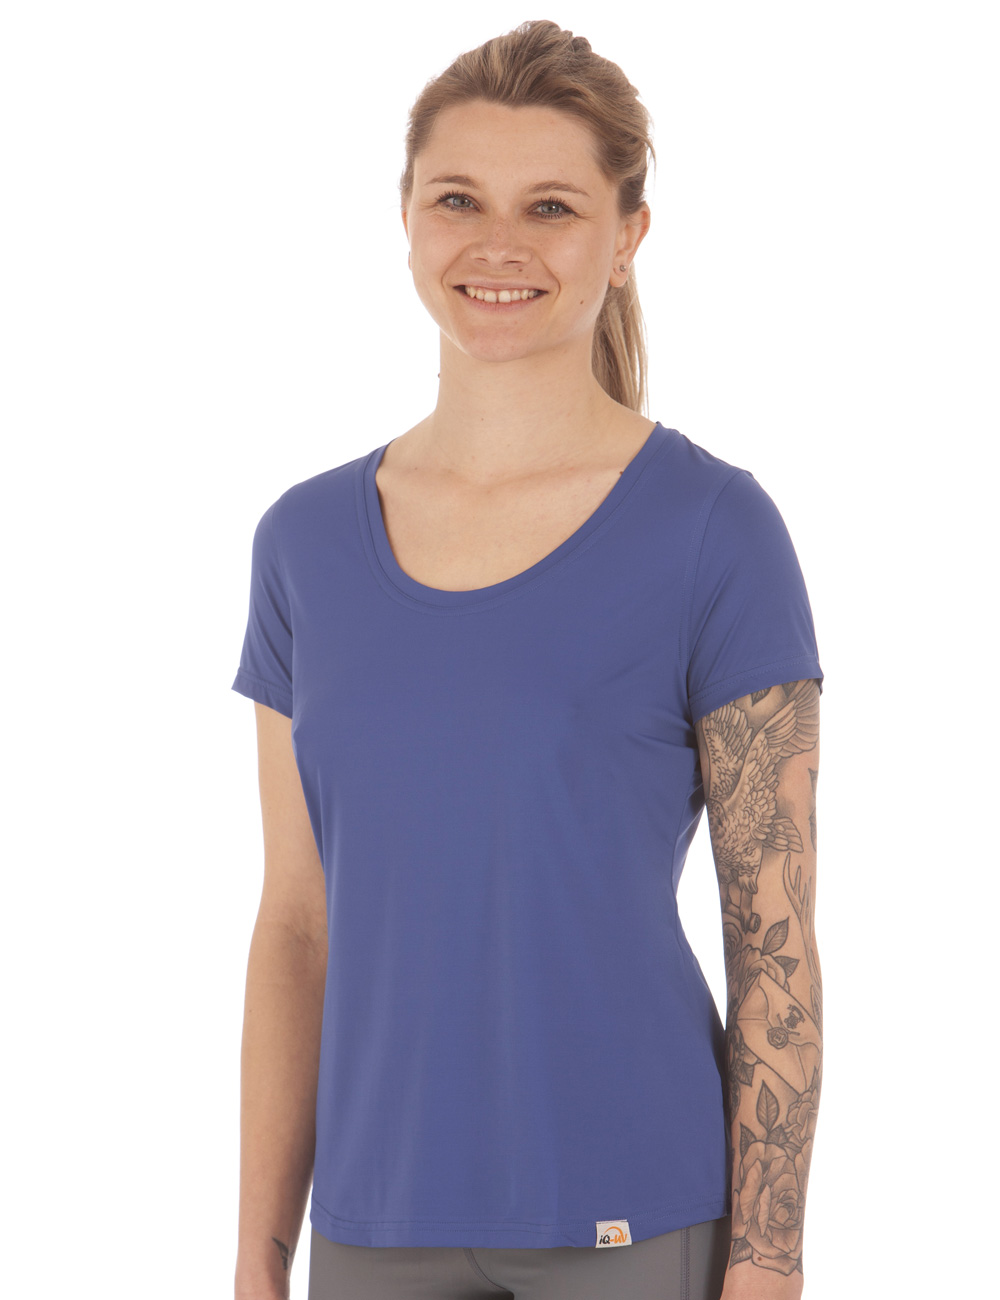 UV FREE Weitsicht shirt kurzarm blau